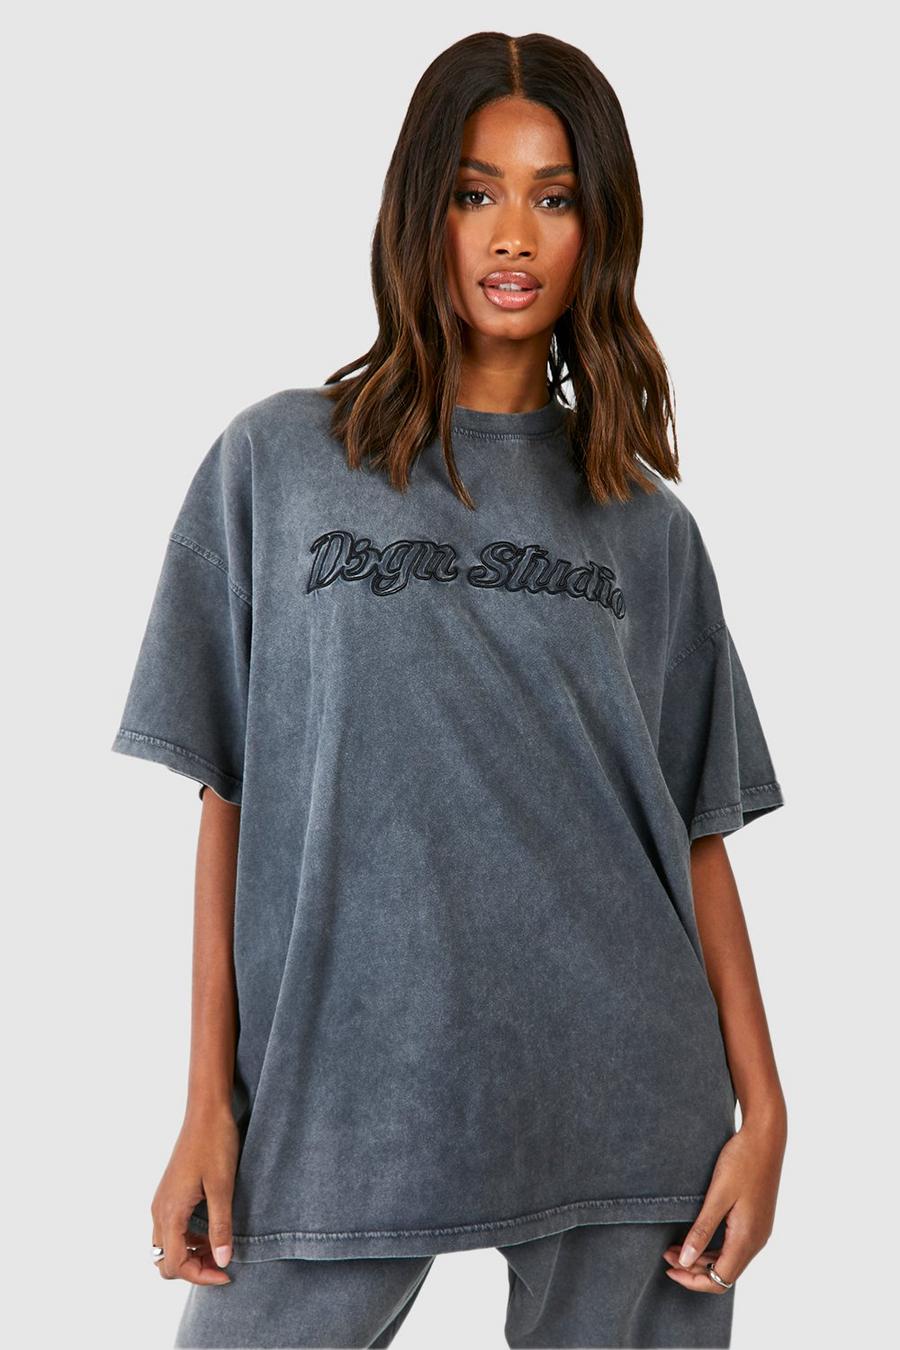 Oversize Batik T-Shirt mit Dsgn Studio Stickerei, Charcoal